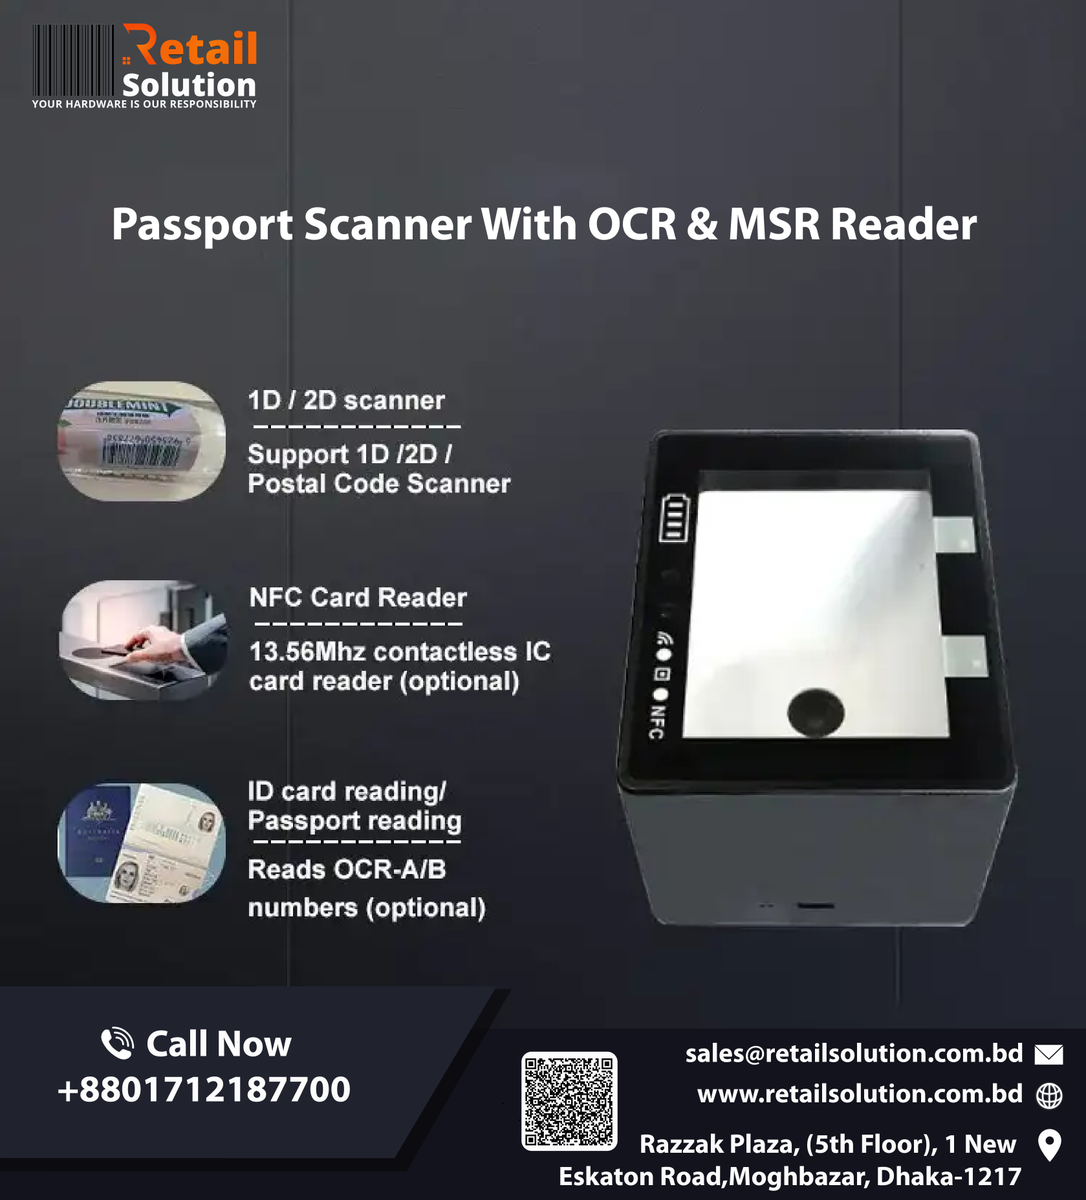 Passport Scanner With OCR & MSR Reader 

Technology
NFC/RFID
Barcode
OCR/MRZ

retailsolution.com.bd/passport-scann…

Call for Price 
Cell: 01712-187700
Address: Razzak Plaza, (5th Floor), 1 New Eskaton Road, Moghbazar, Dhaka-1217

#passportscanner
#passportreader
#atompassportscanner